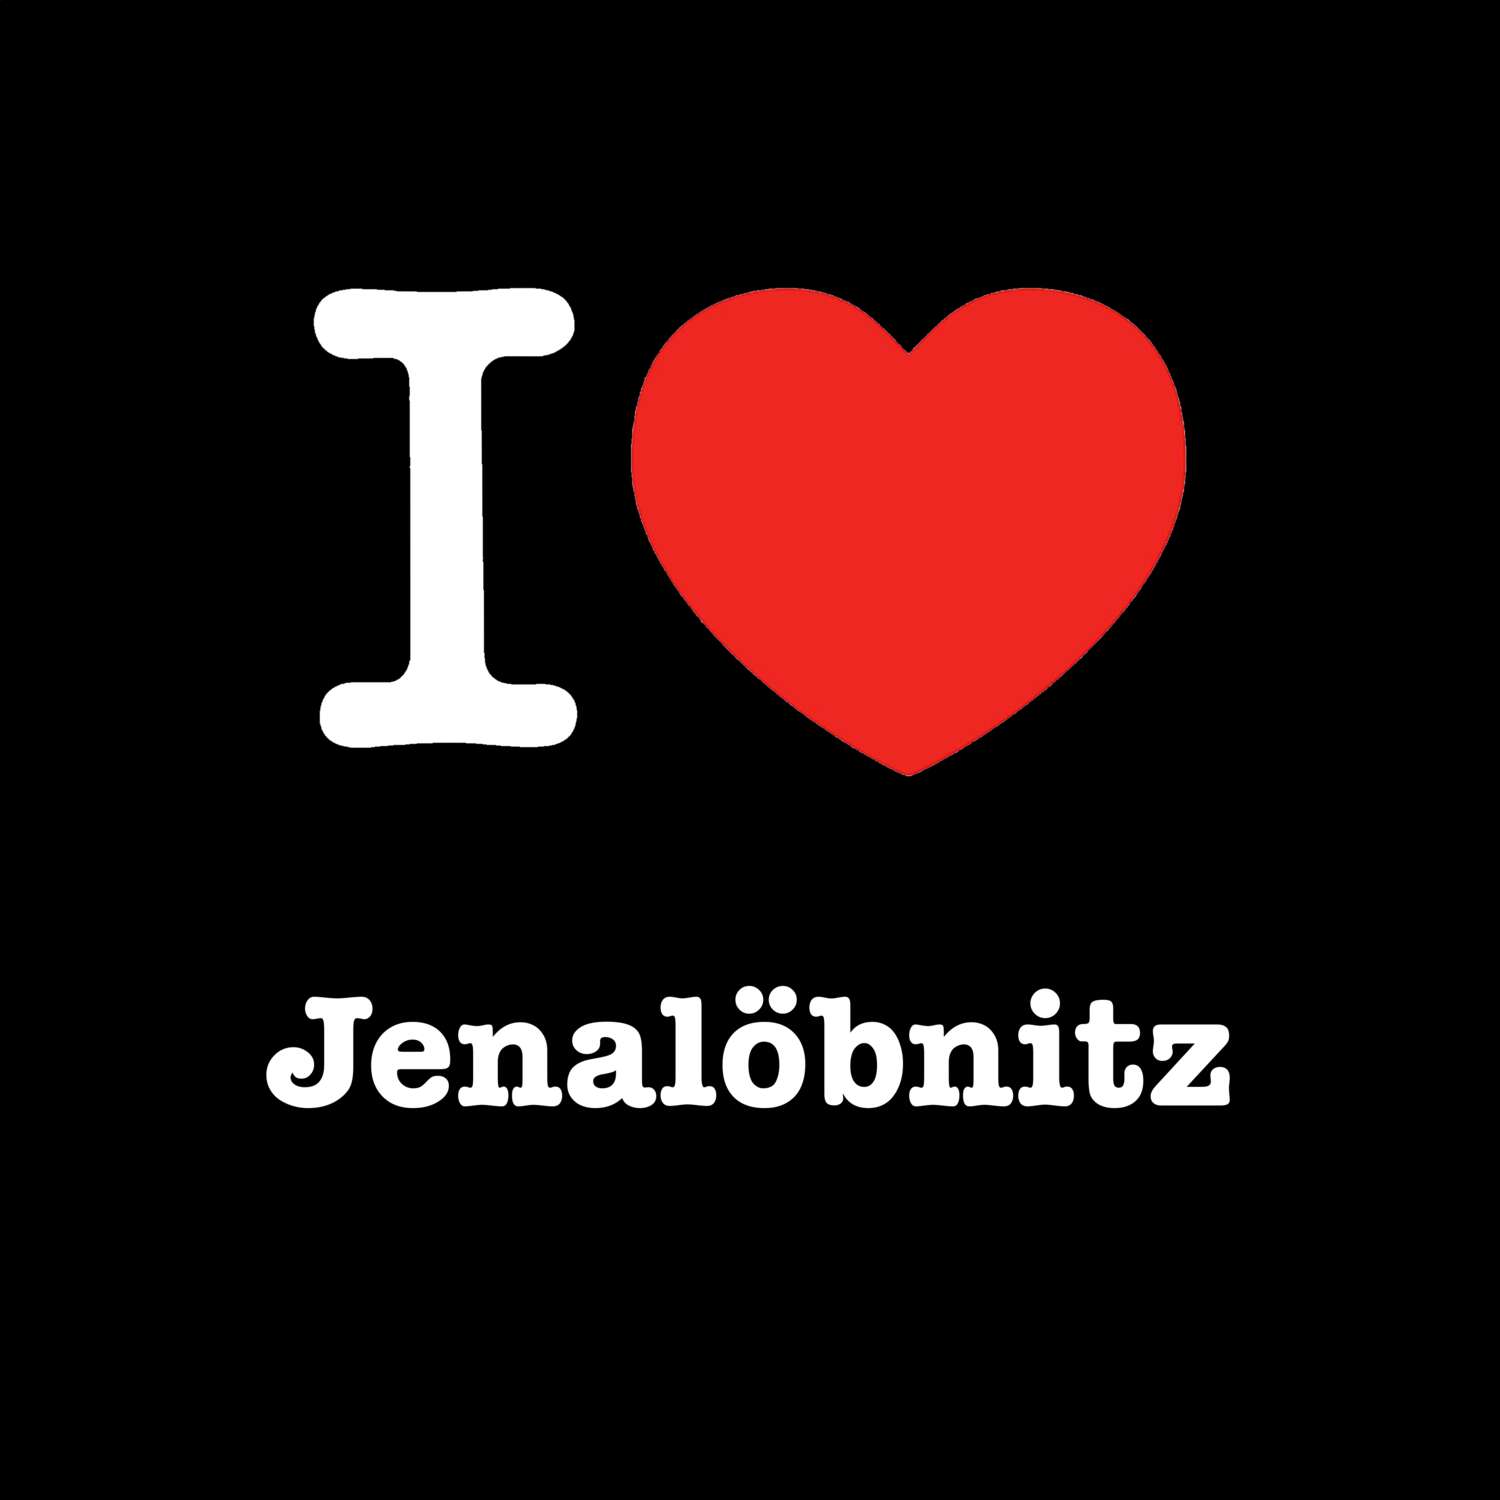 Jenalöbnitz T-Shirt »I love«